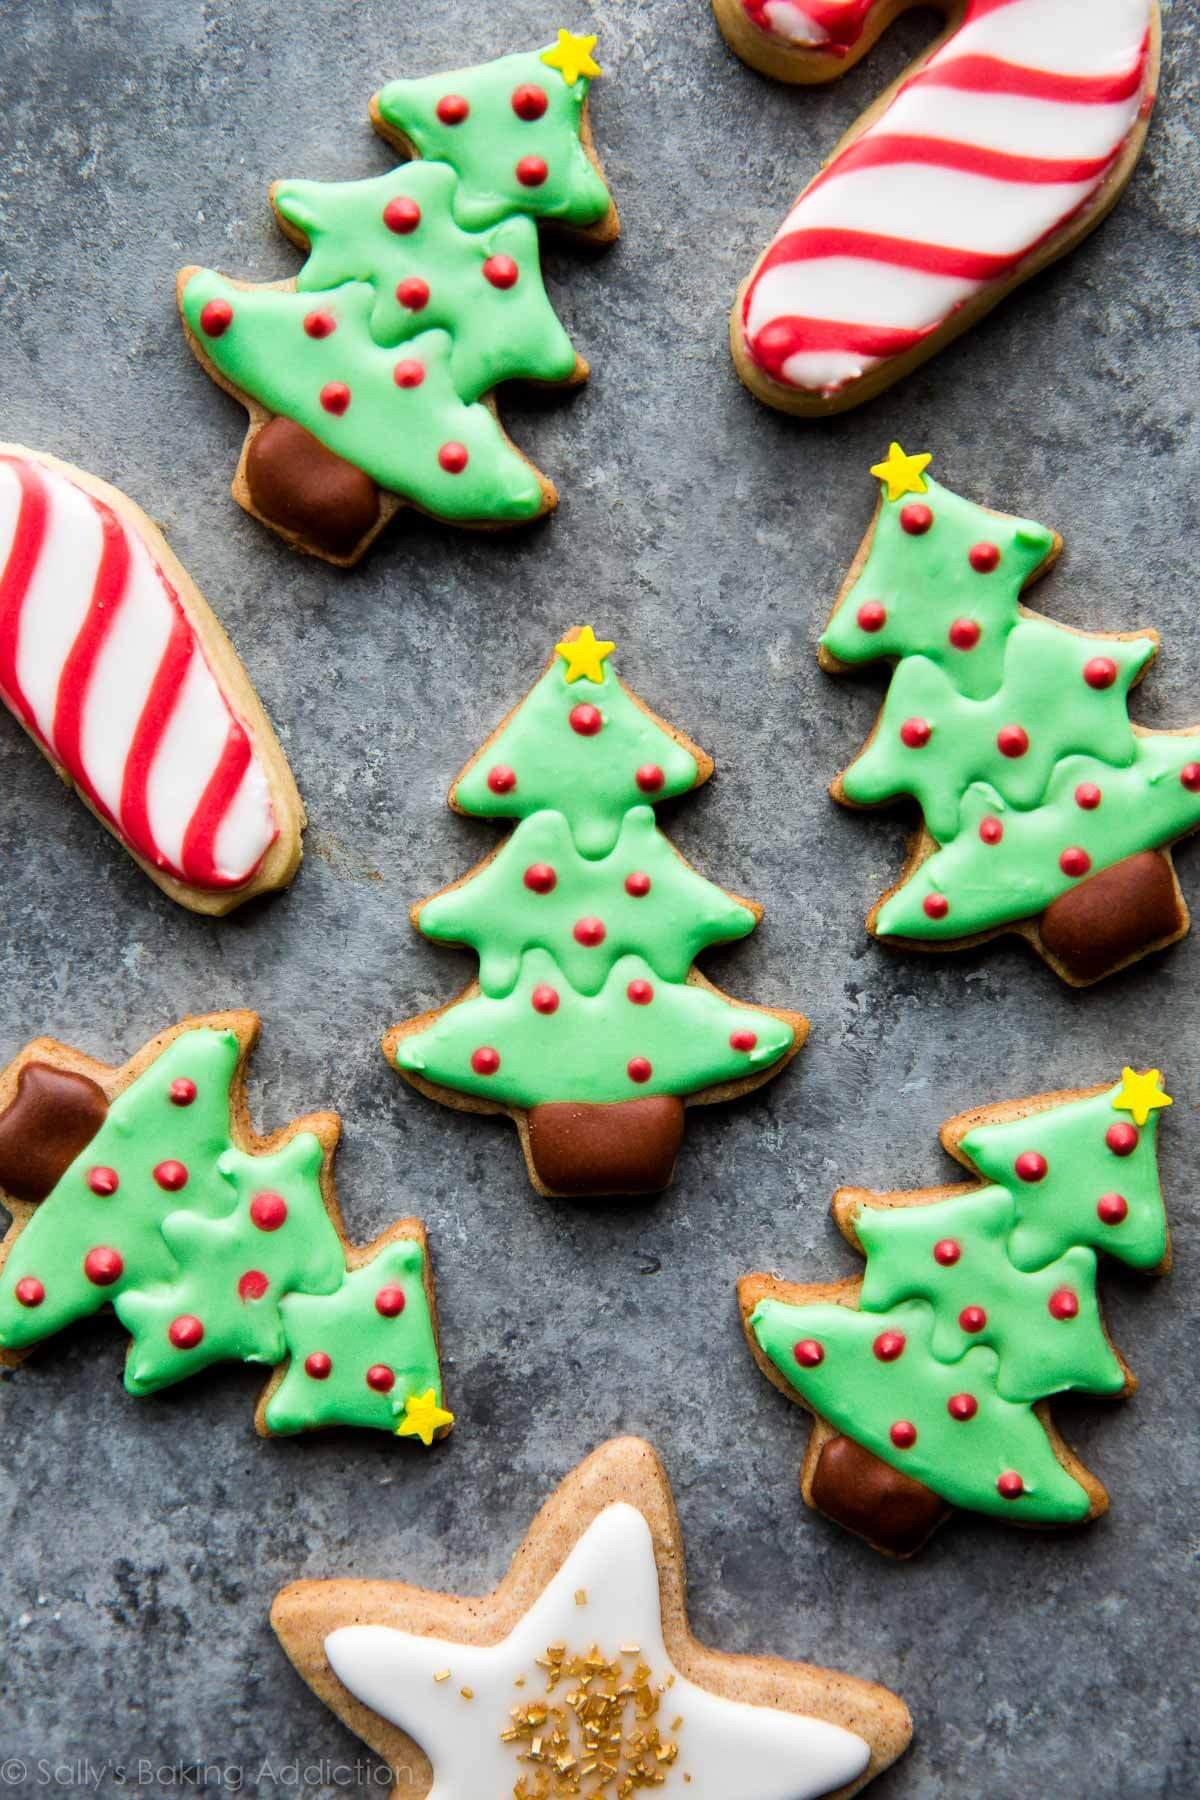 Decorated Christmas Sugar Cookies
 1 Sugar Cookie Dough 5 Ways to Decorate Sallys Baking